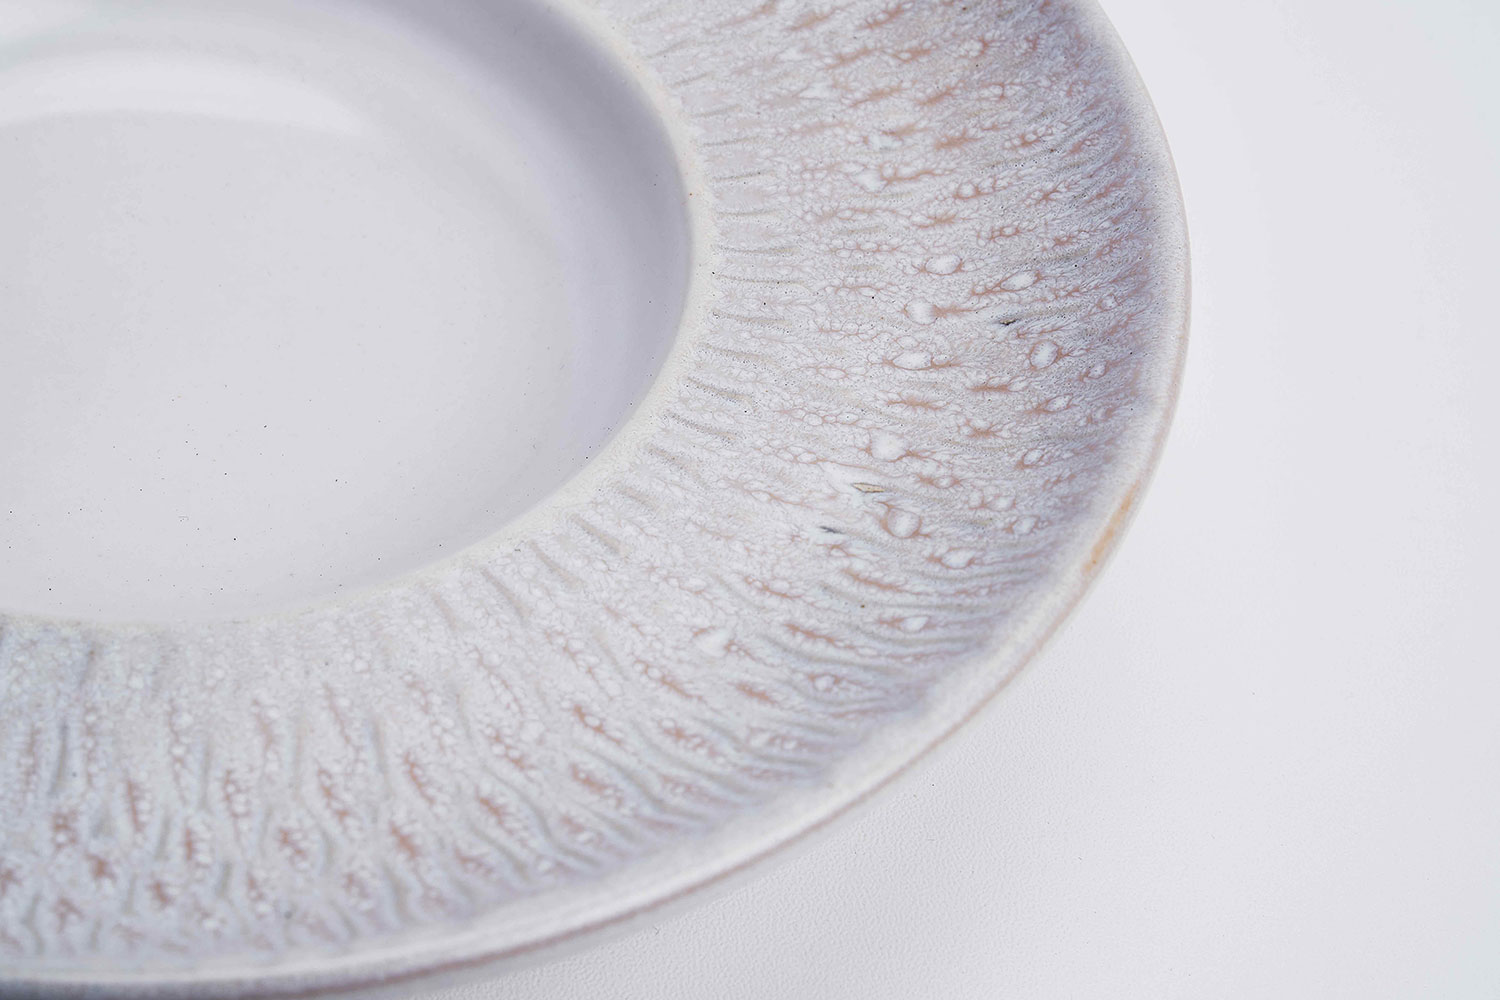 Kevala Ceramics in partnership with Poise